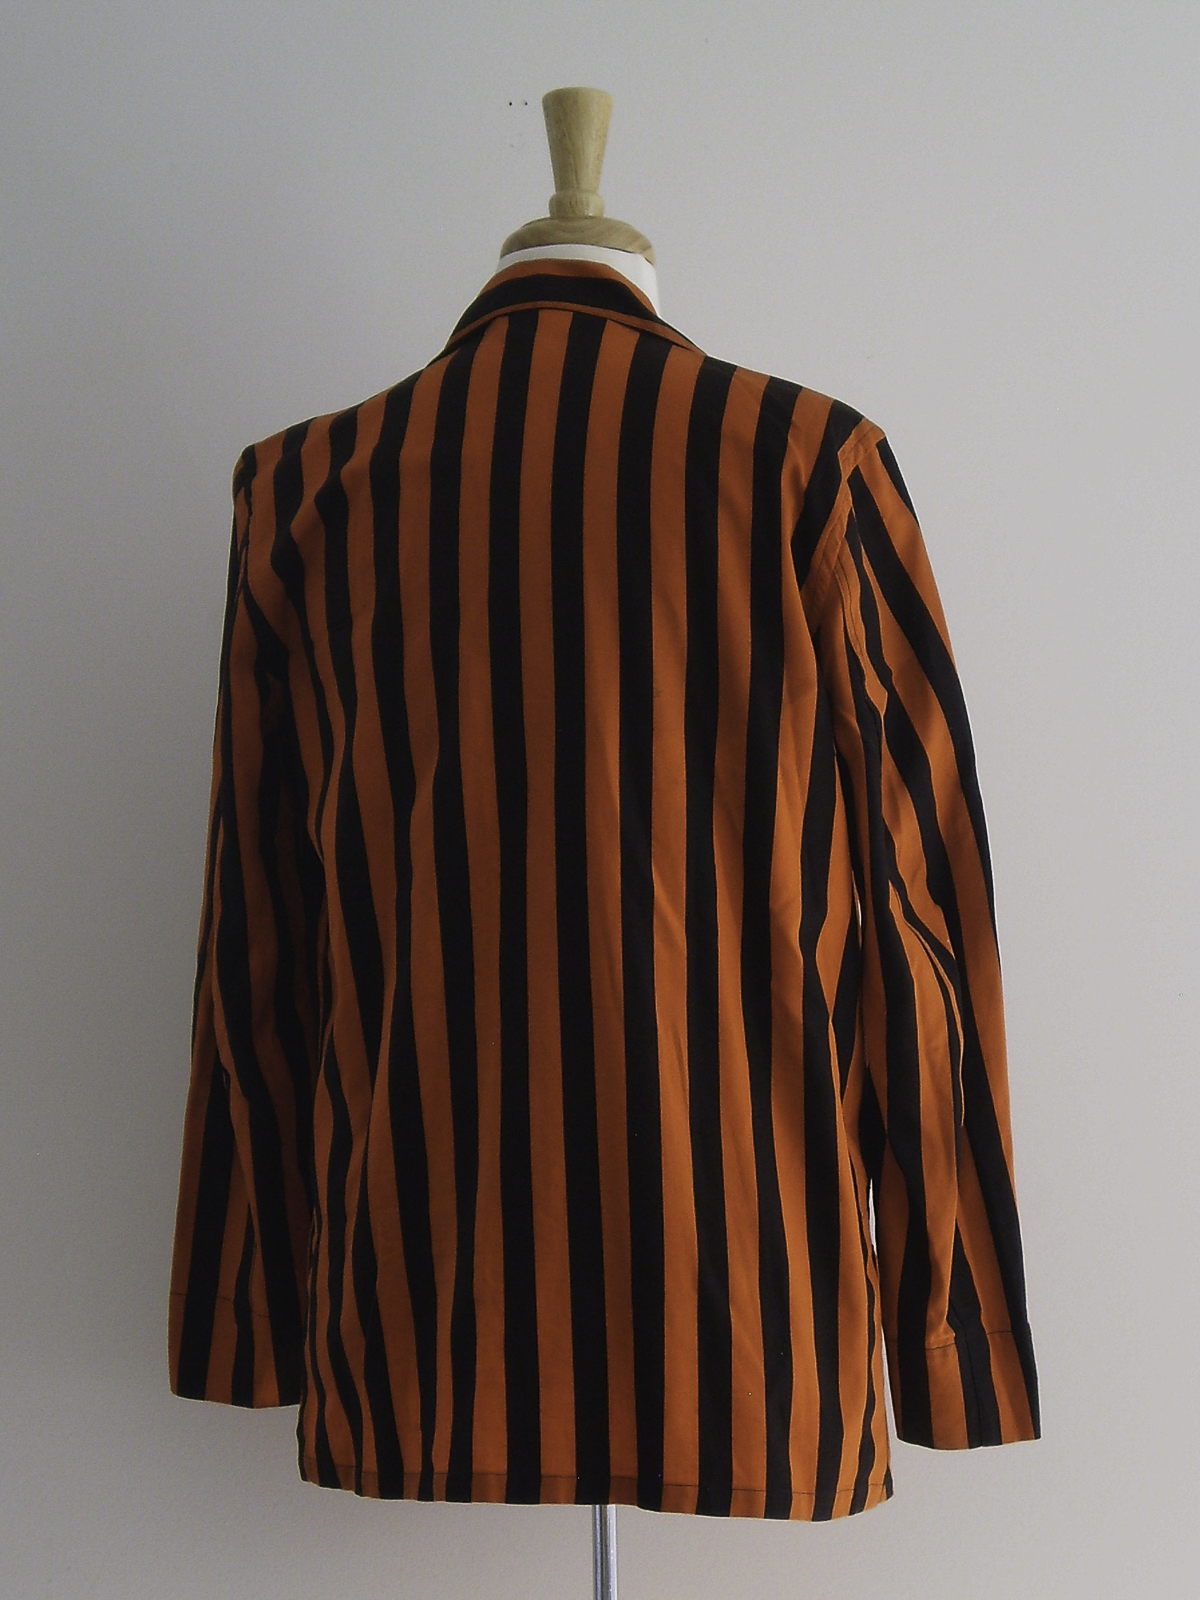 Reunion Jacket 1933 Variation II Rear